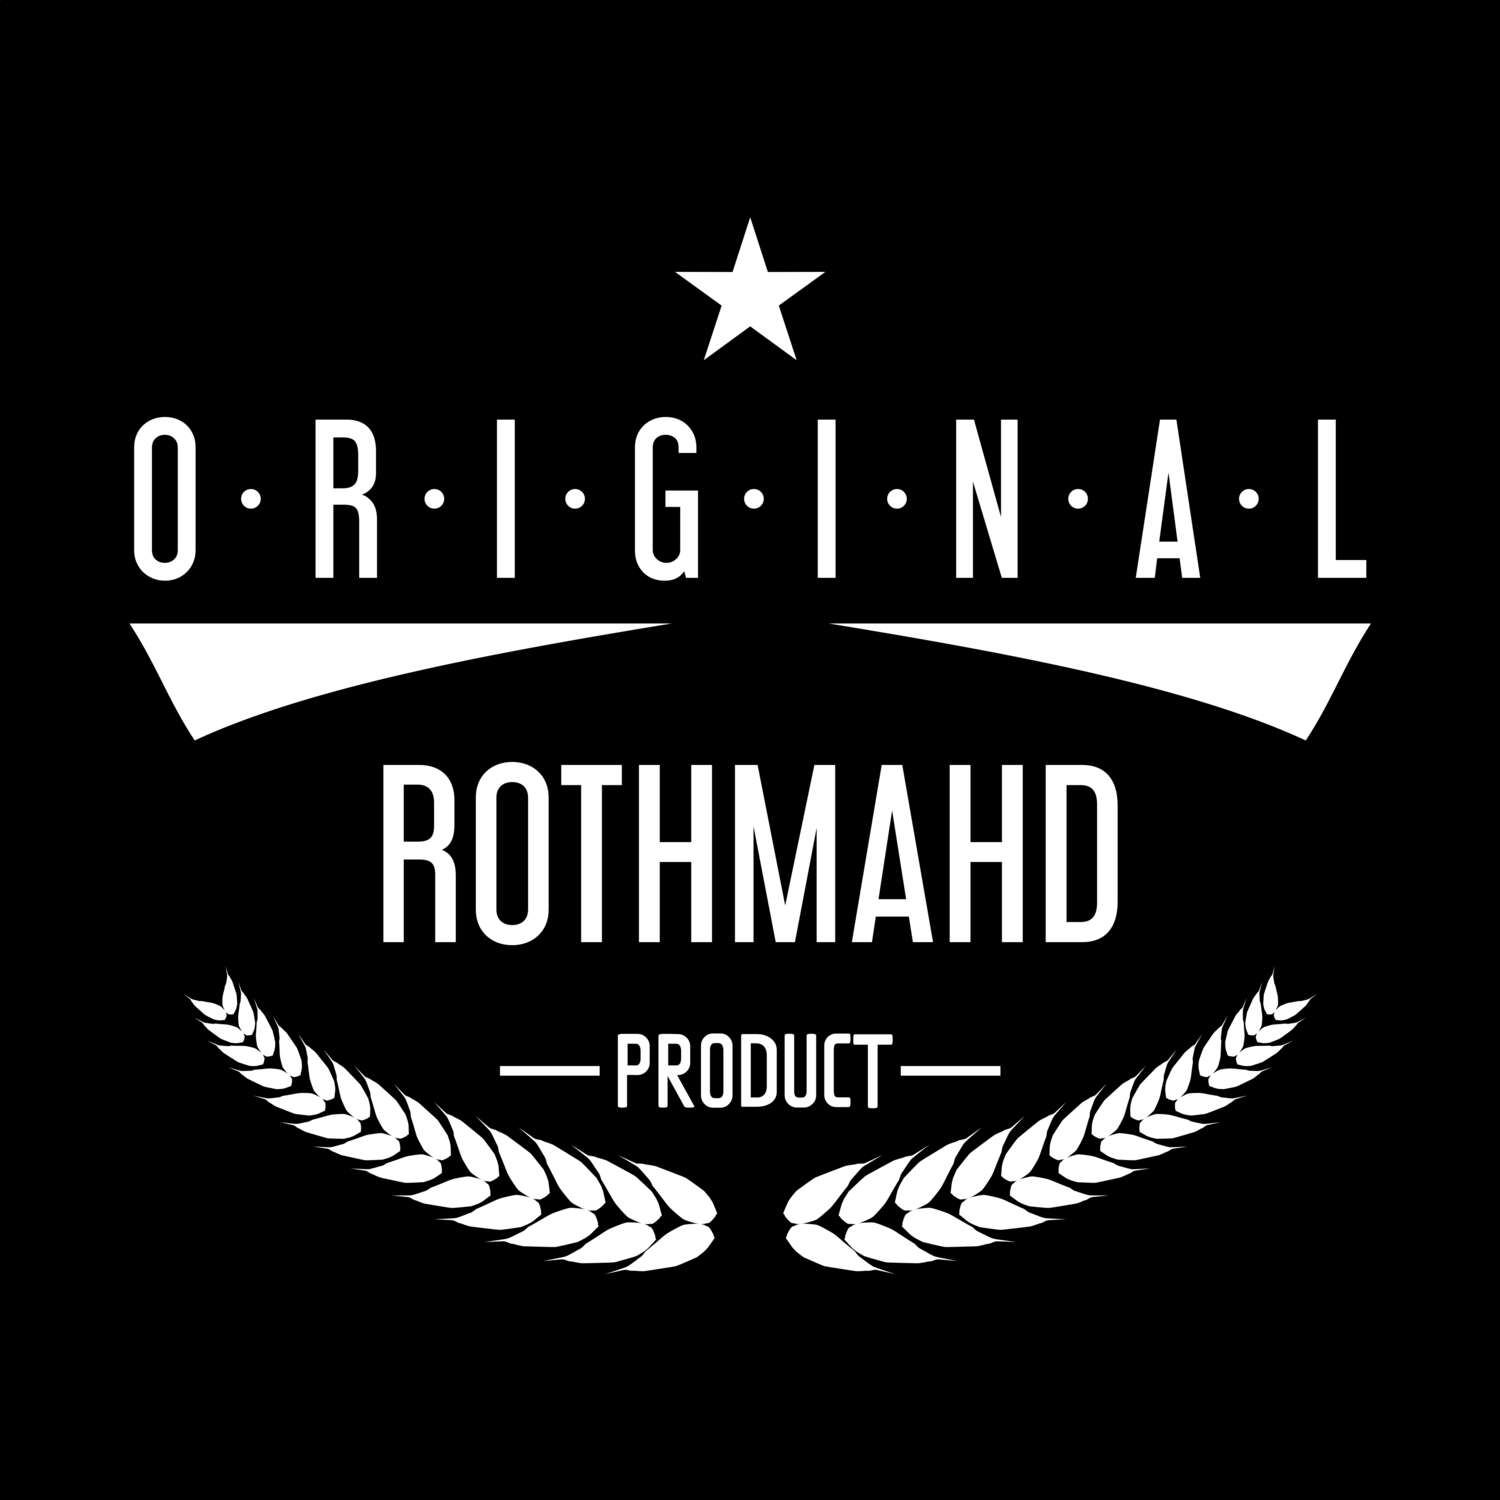 Rothmahd T-Shirt »Original Product«